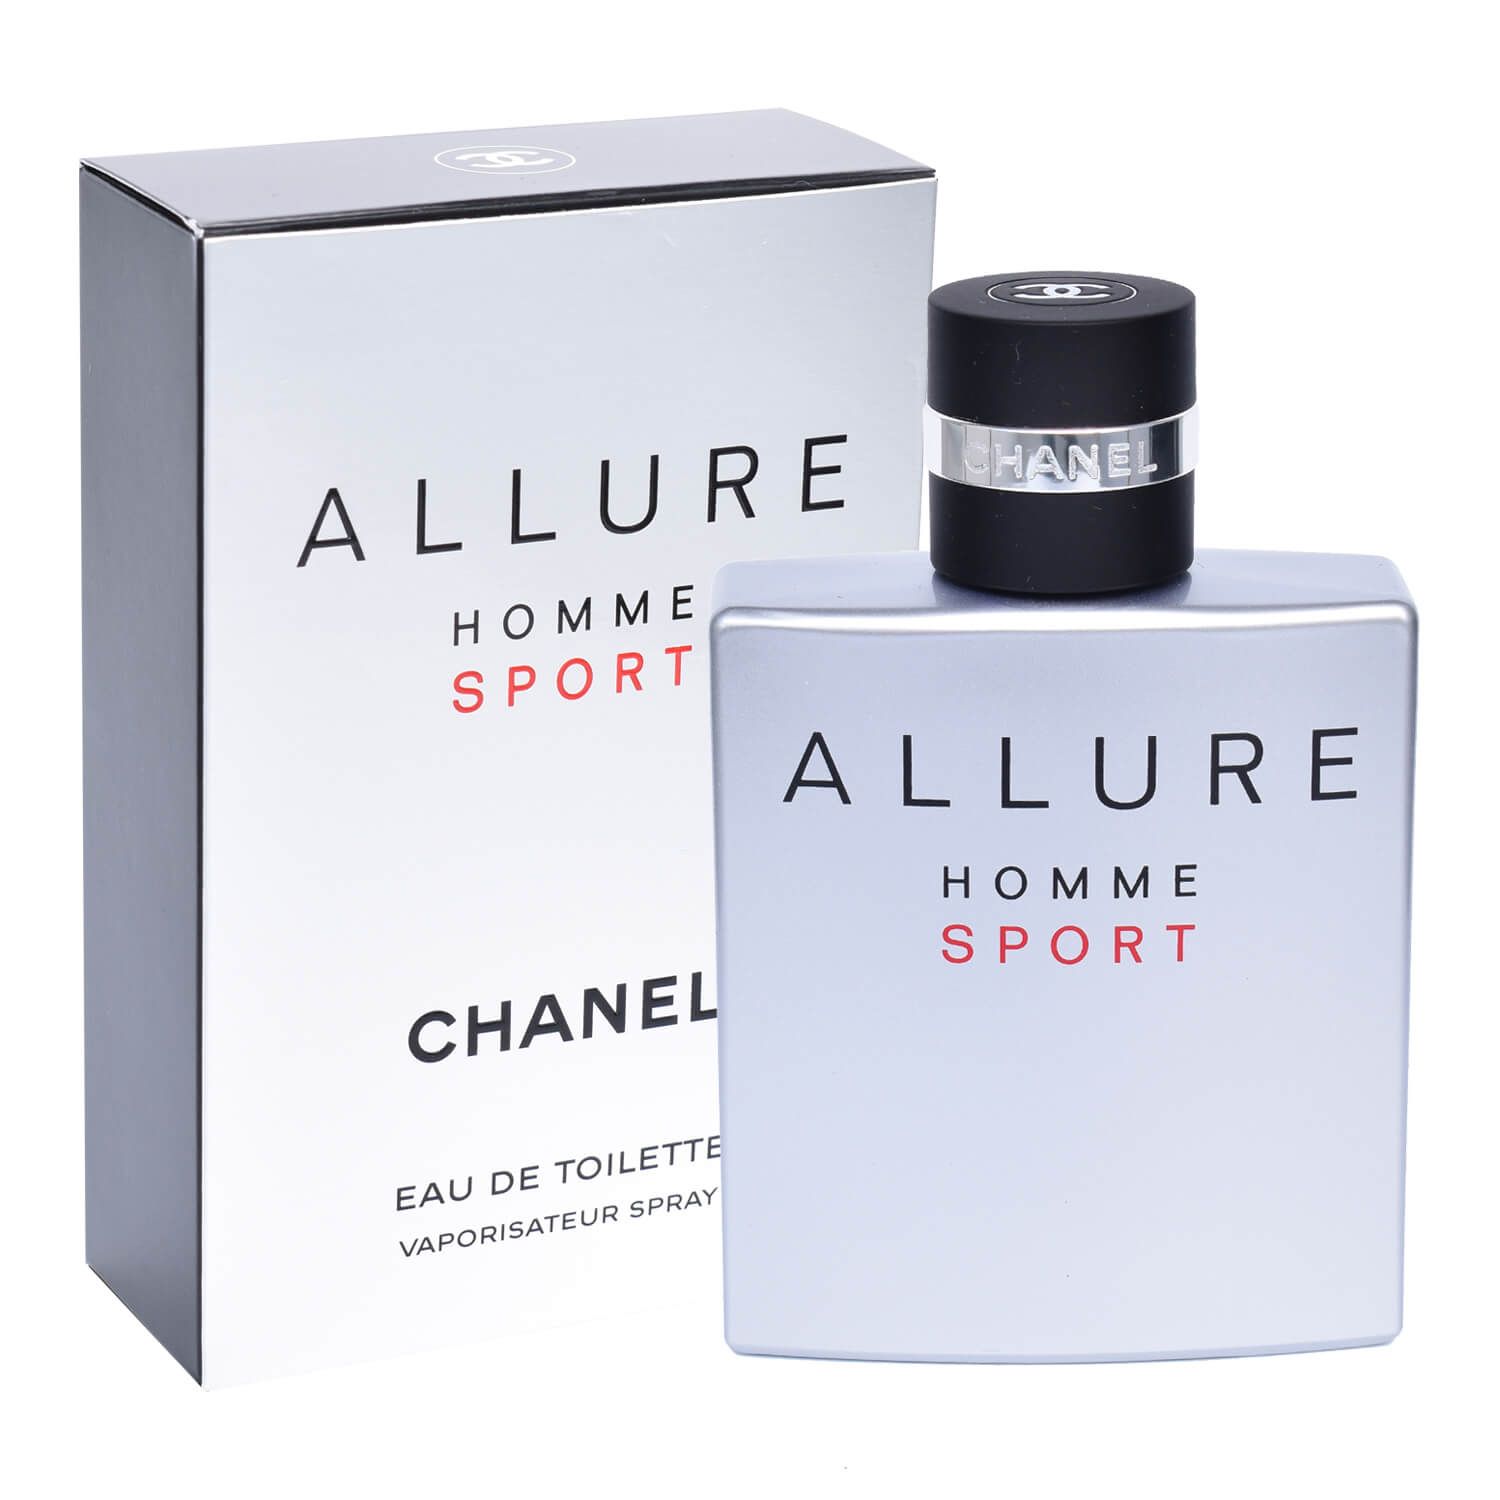 Chanel Allure homme Sport, Eau de Toilette Spray -50 ml